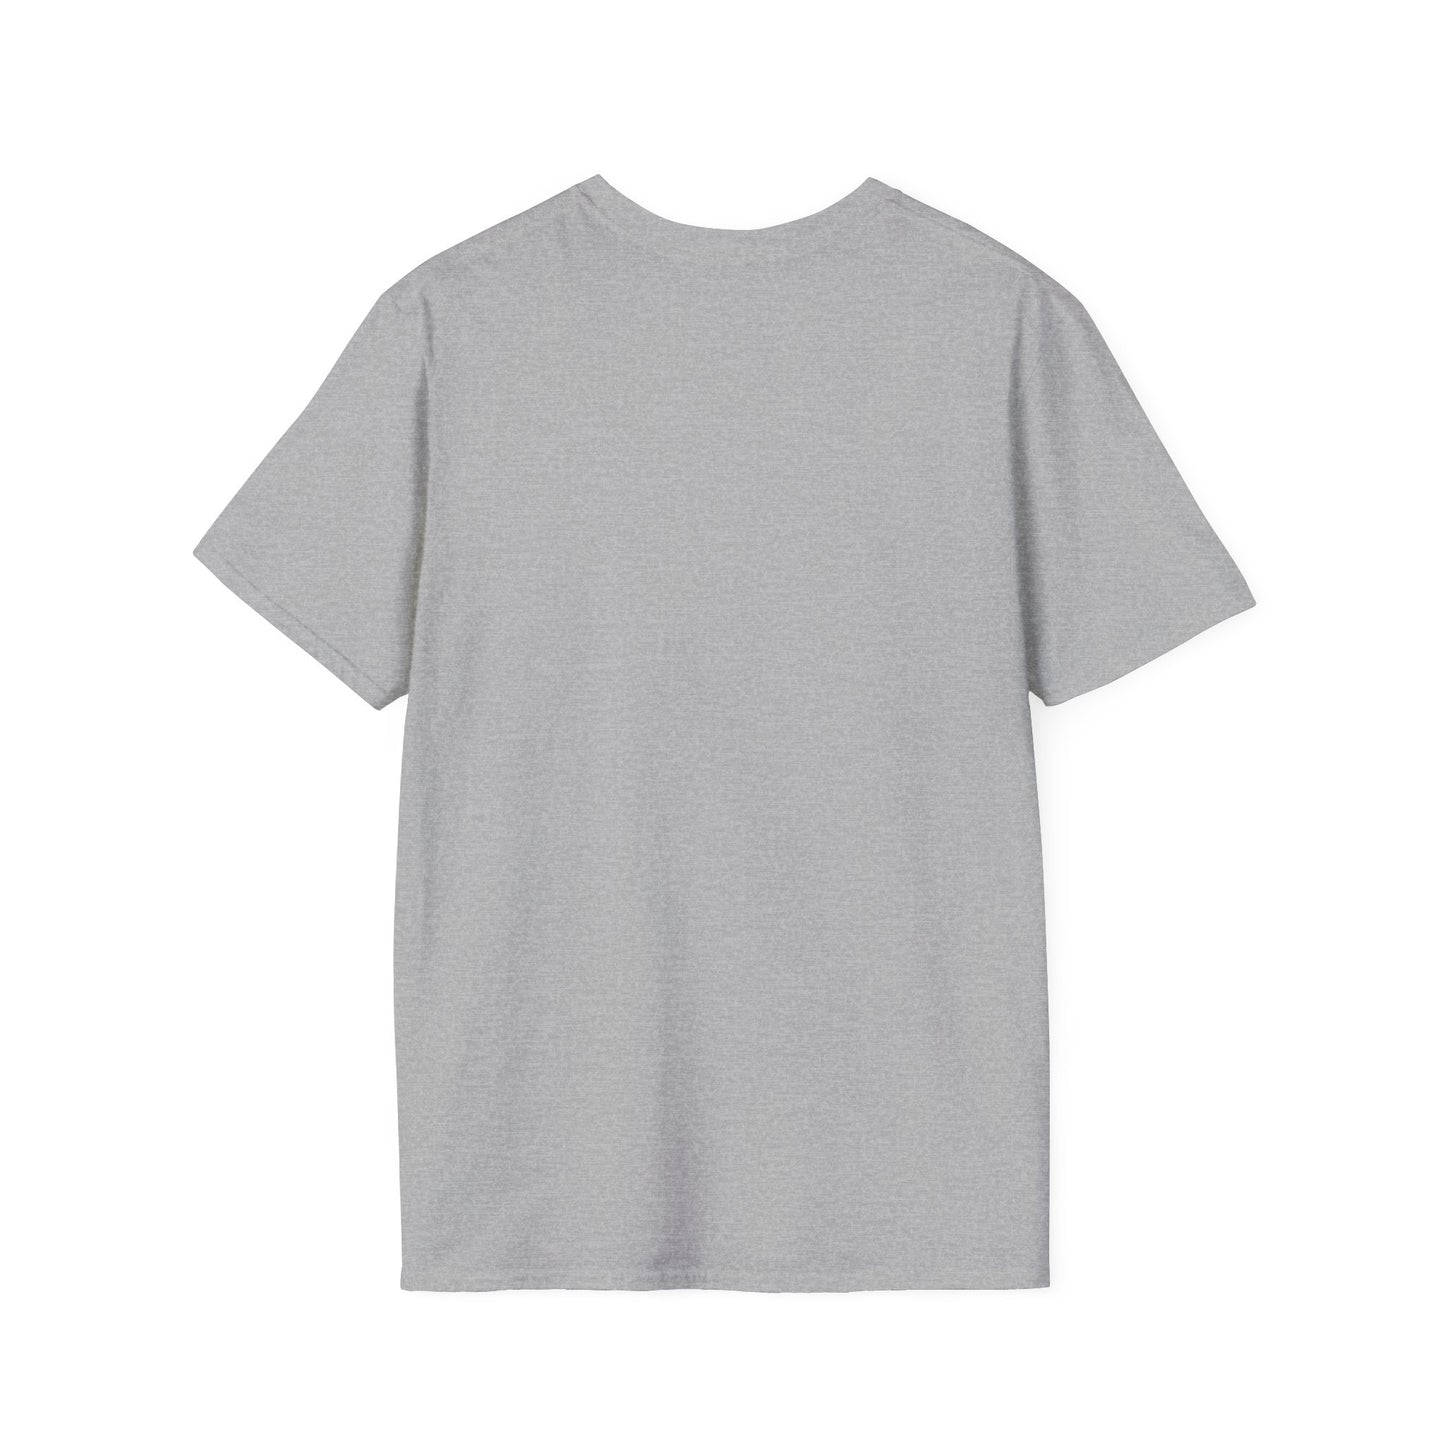 TEAM  LAKELAND TERRIER  -  NASDA  Unisex Softstyle T-Shirt